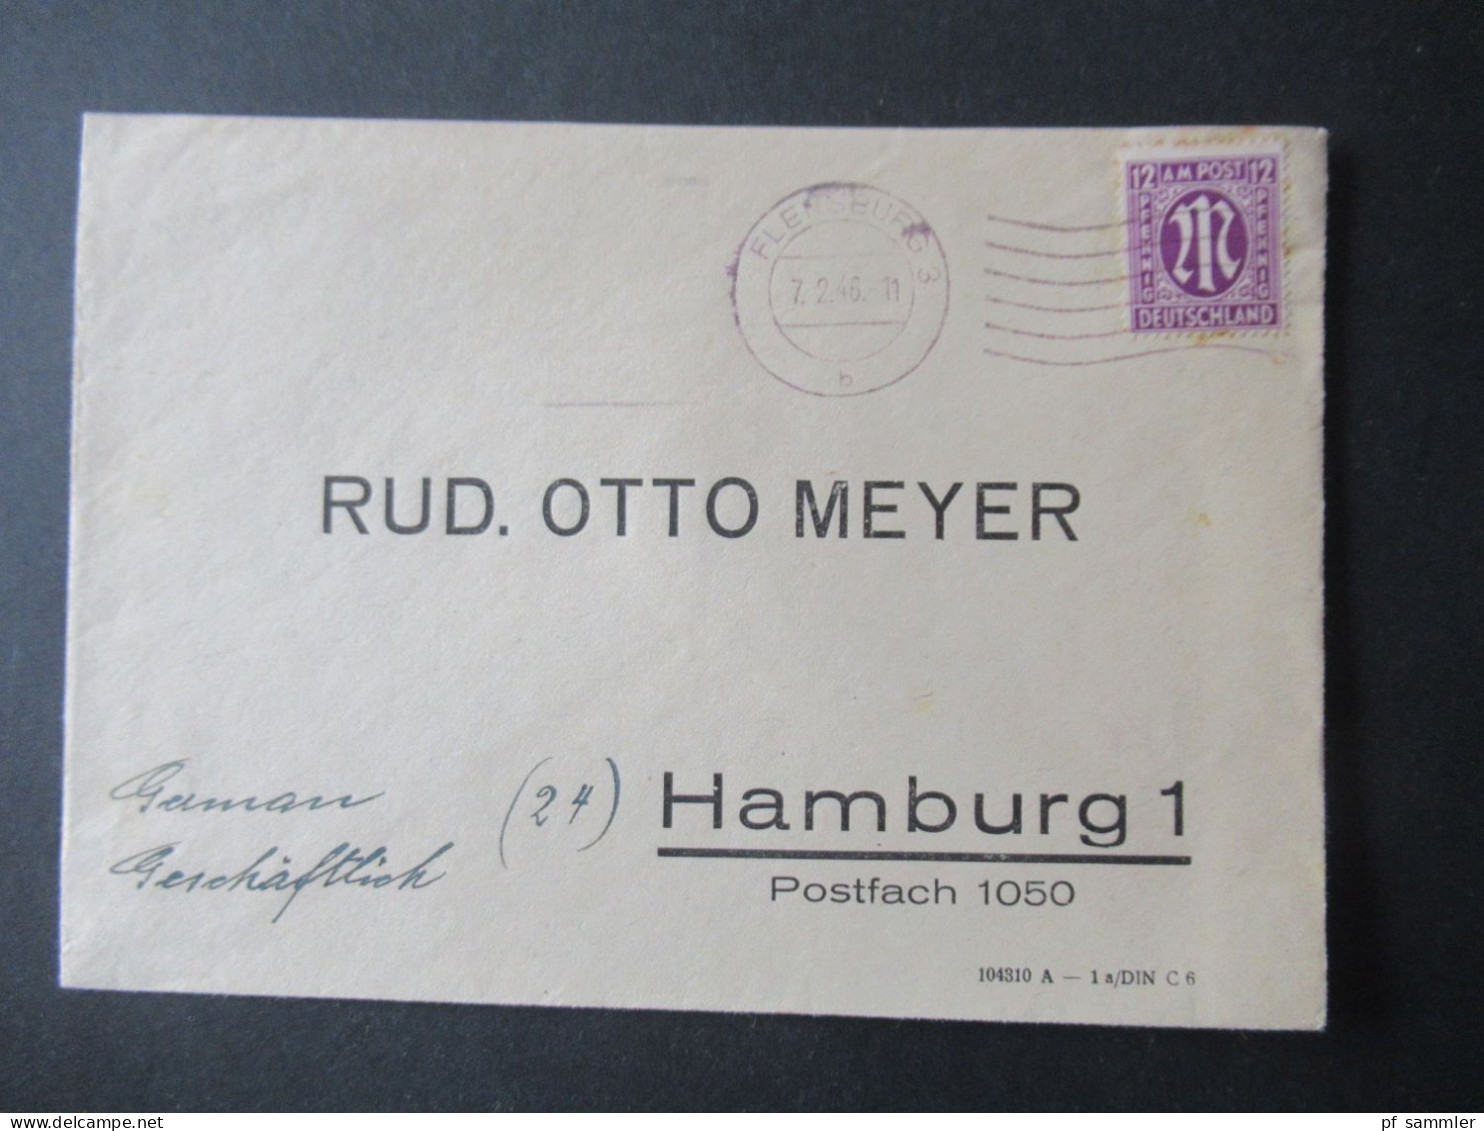 Bizone Am Post 7.2.1946 Engl. Druck Maschinenstempel Flensburg 3 In Violetter Farbe ?!? Nach Hamburg - Storia Postale